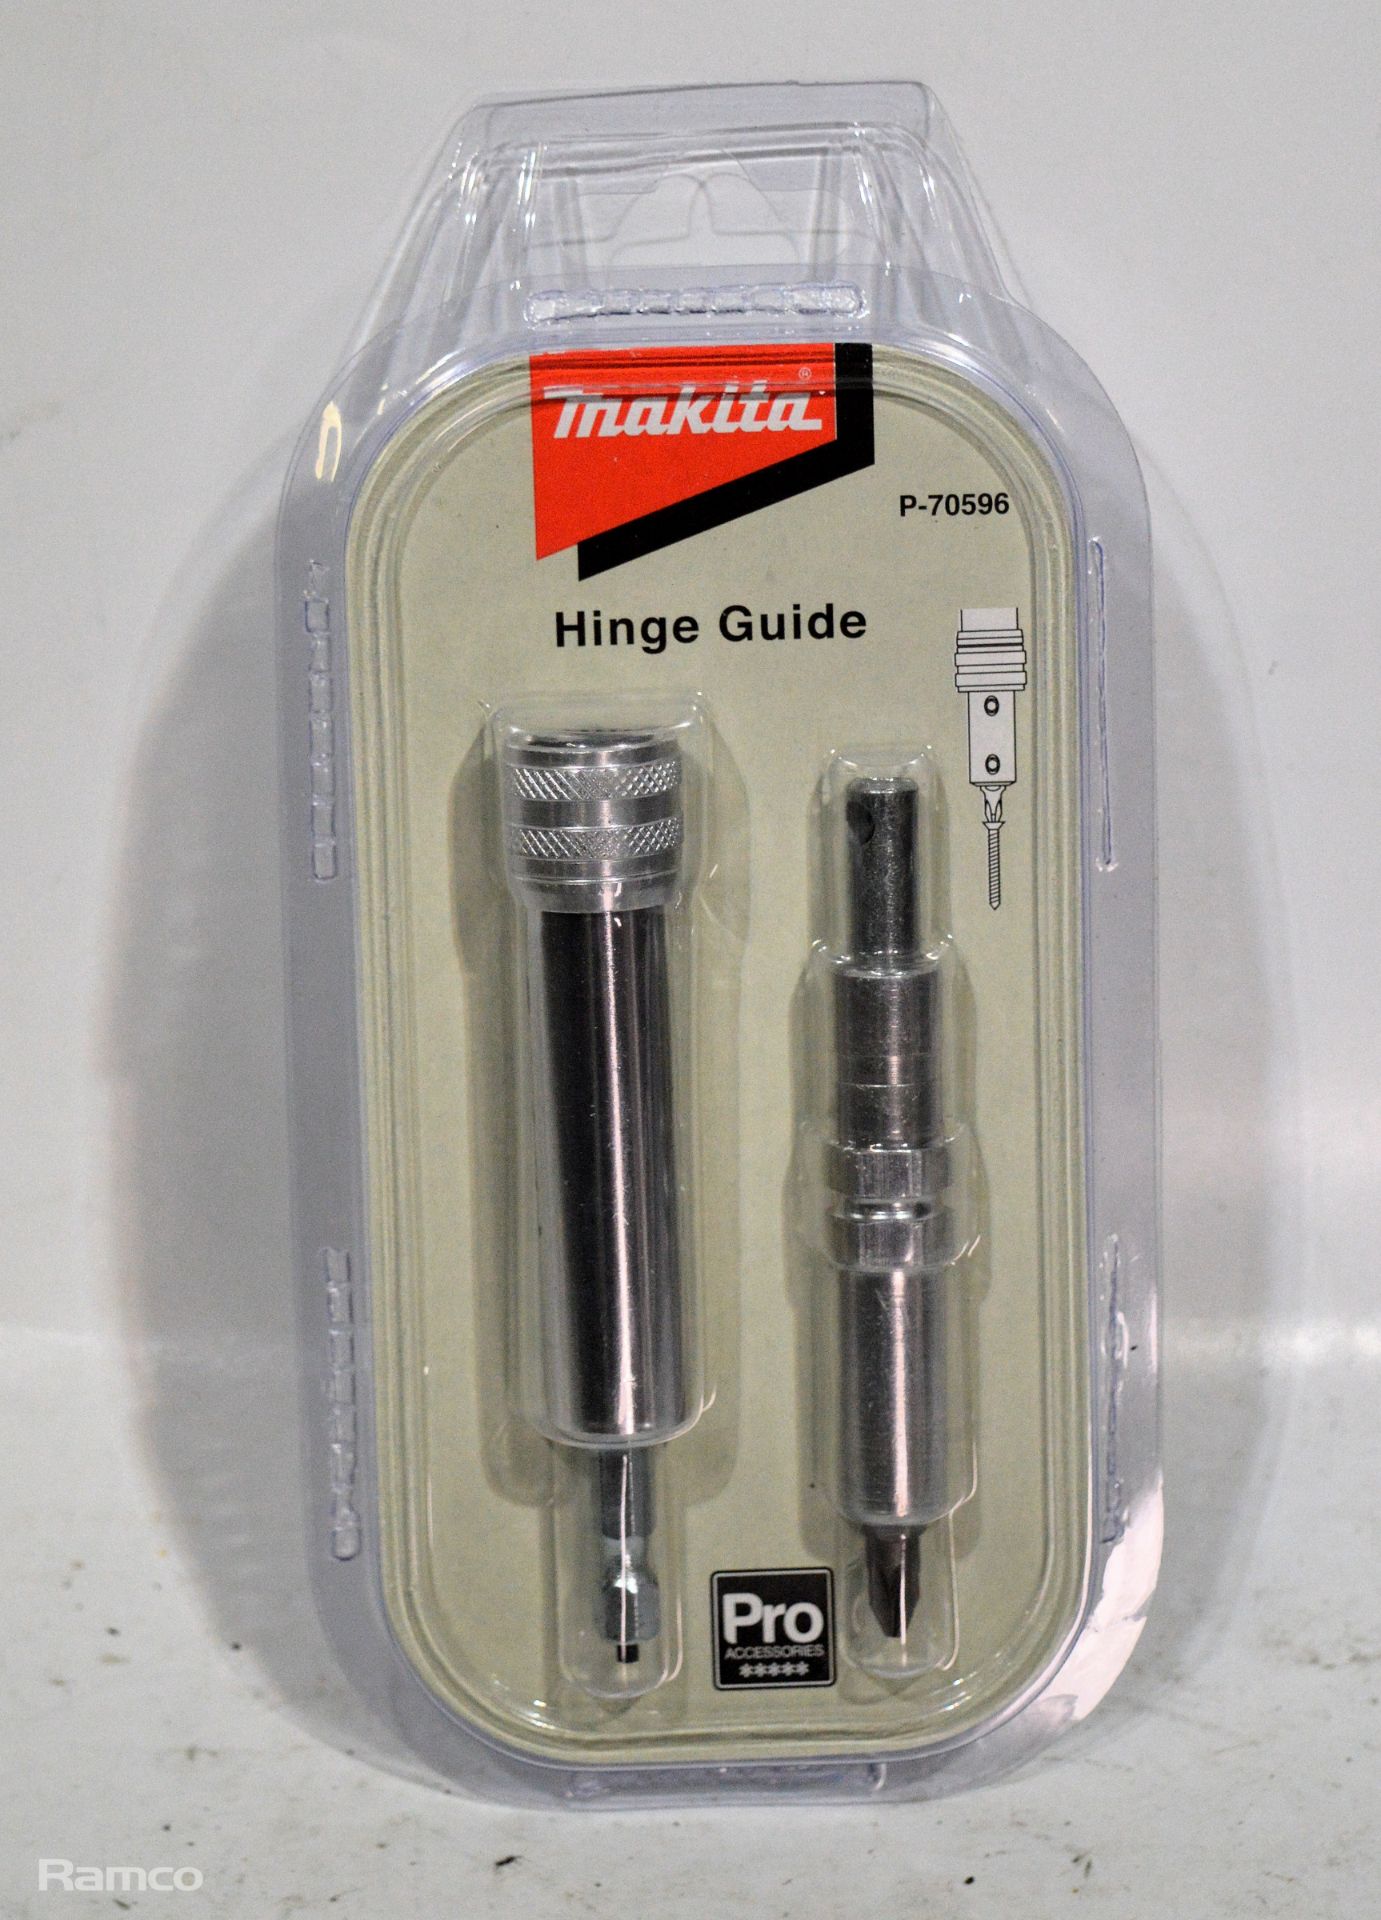 18x Makita P-70596 hinge guide drill/driver tools - Image 2 of 3